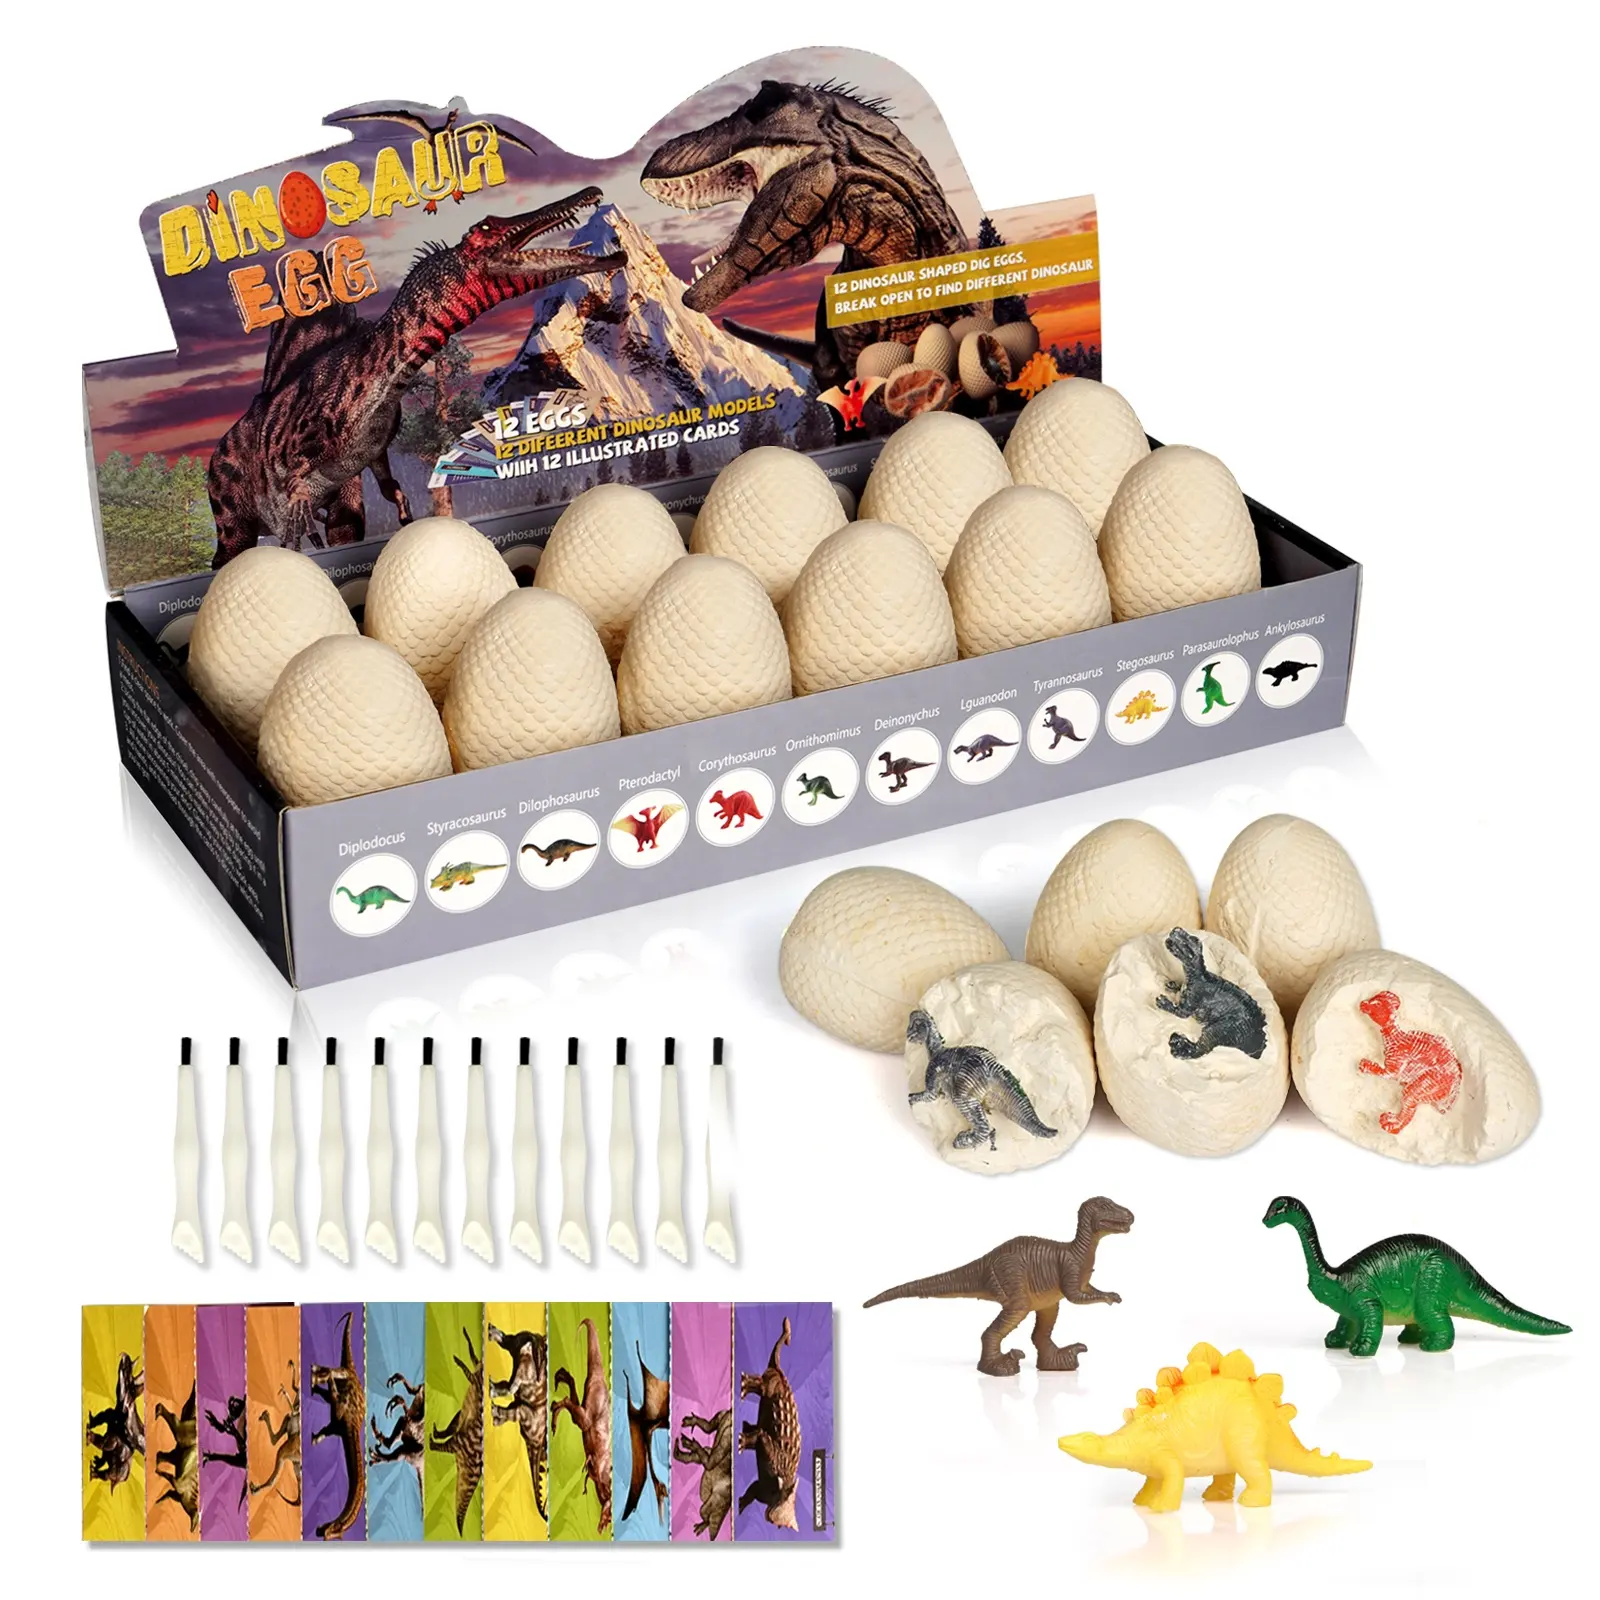 G8608 Kit d'excavation Dig It Out Dinosaur Egg Fossil Toys 12 Dino Eggs Dig Set Science Educational Kits STEM Toys For Kids